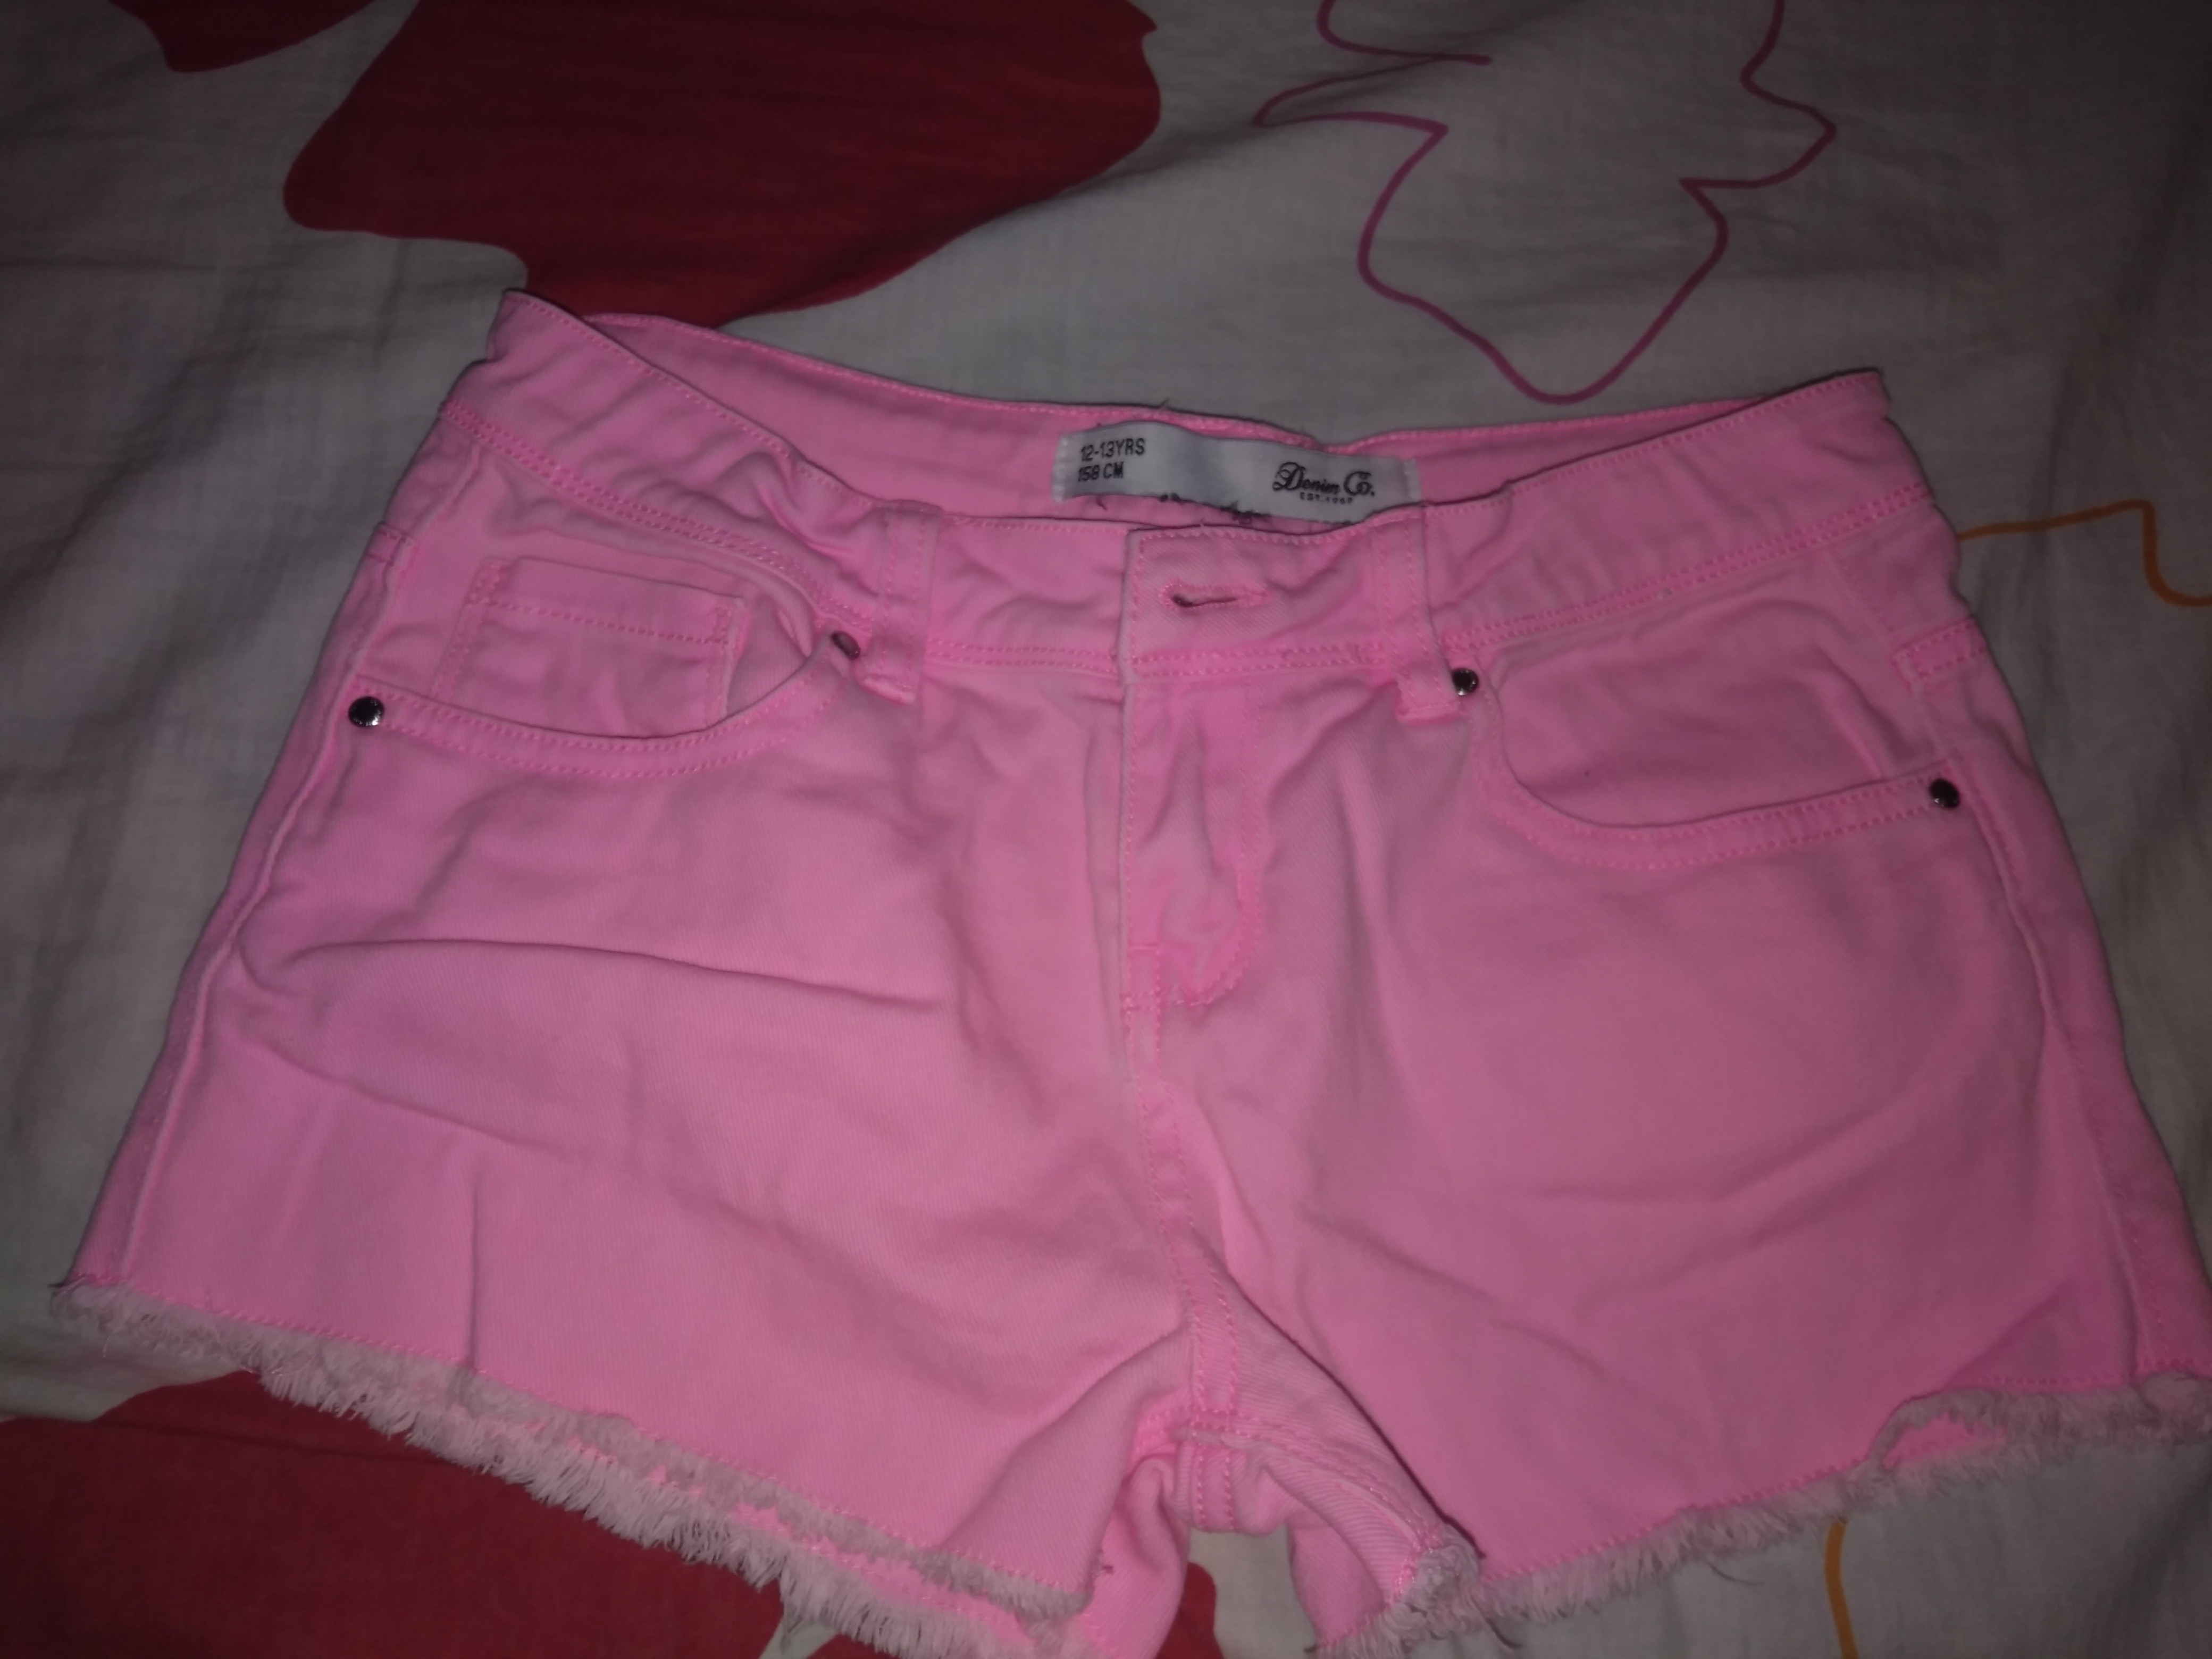 bright pink denim shorts